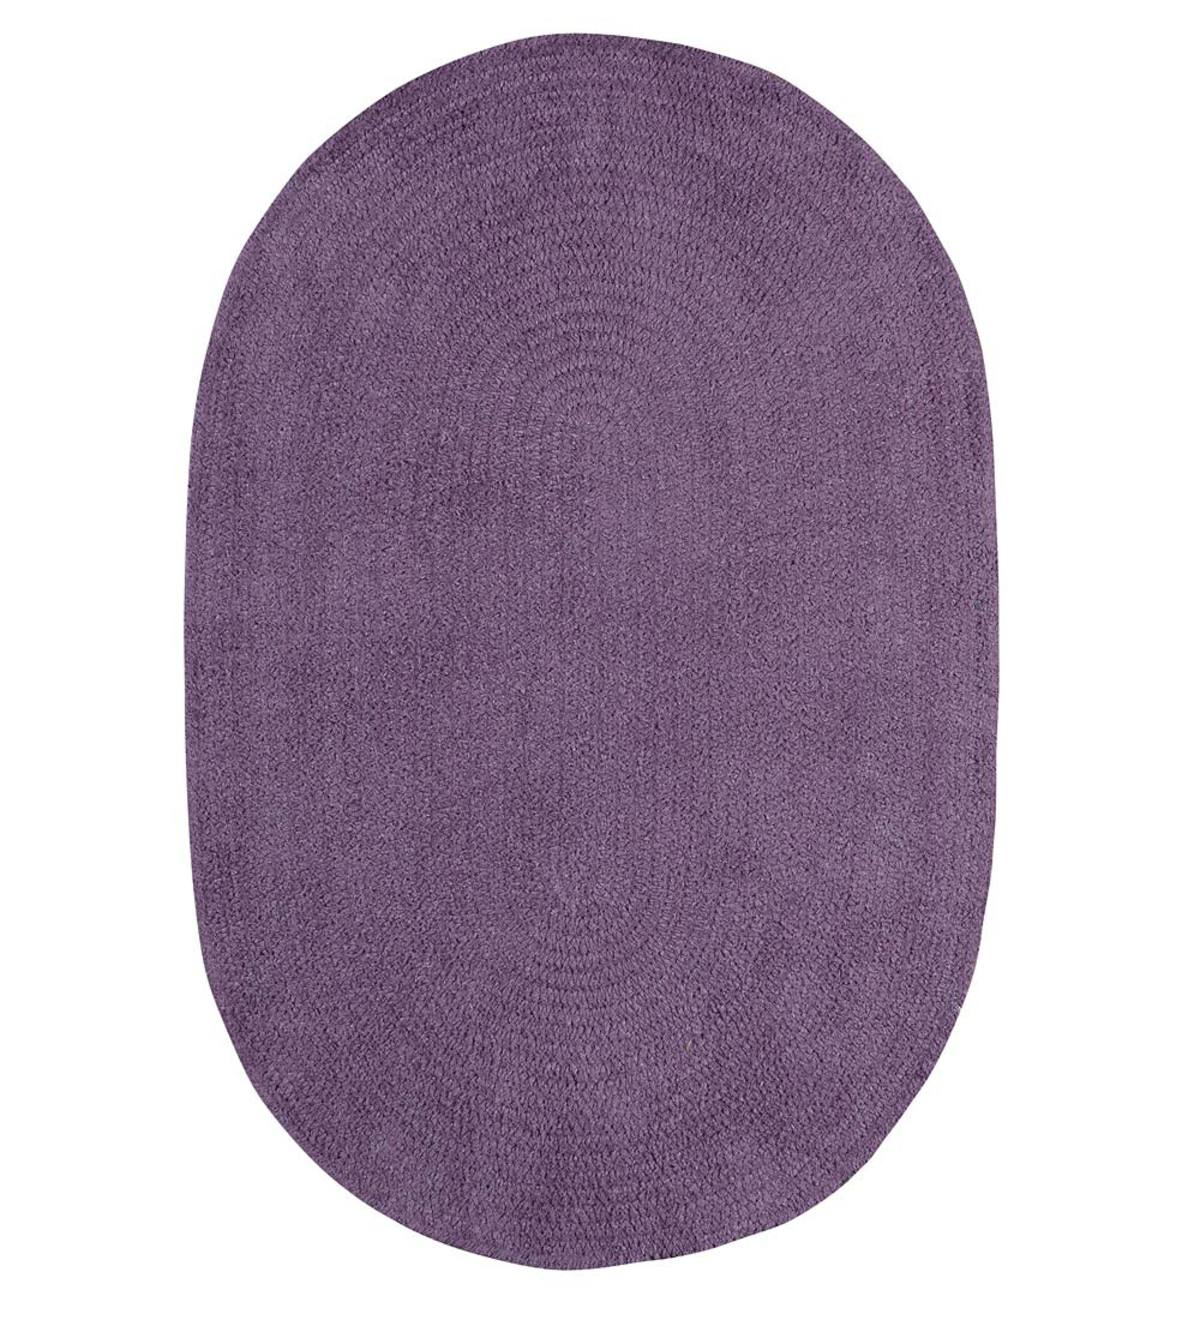 Chenille Oval Braided Area Rug, 3' x 5' - Wistful Purple